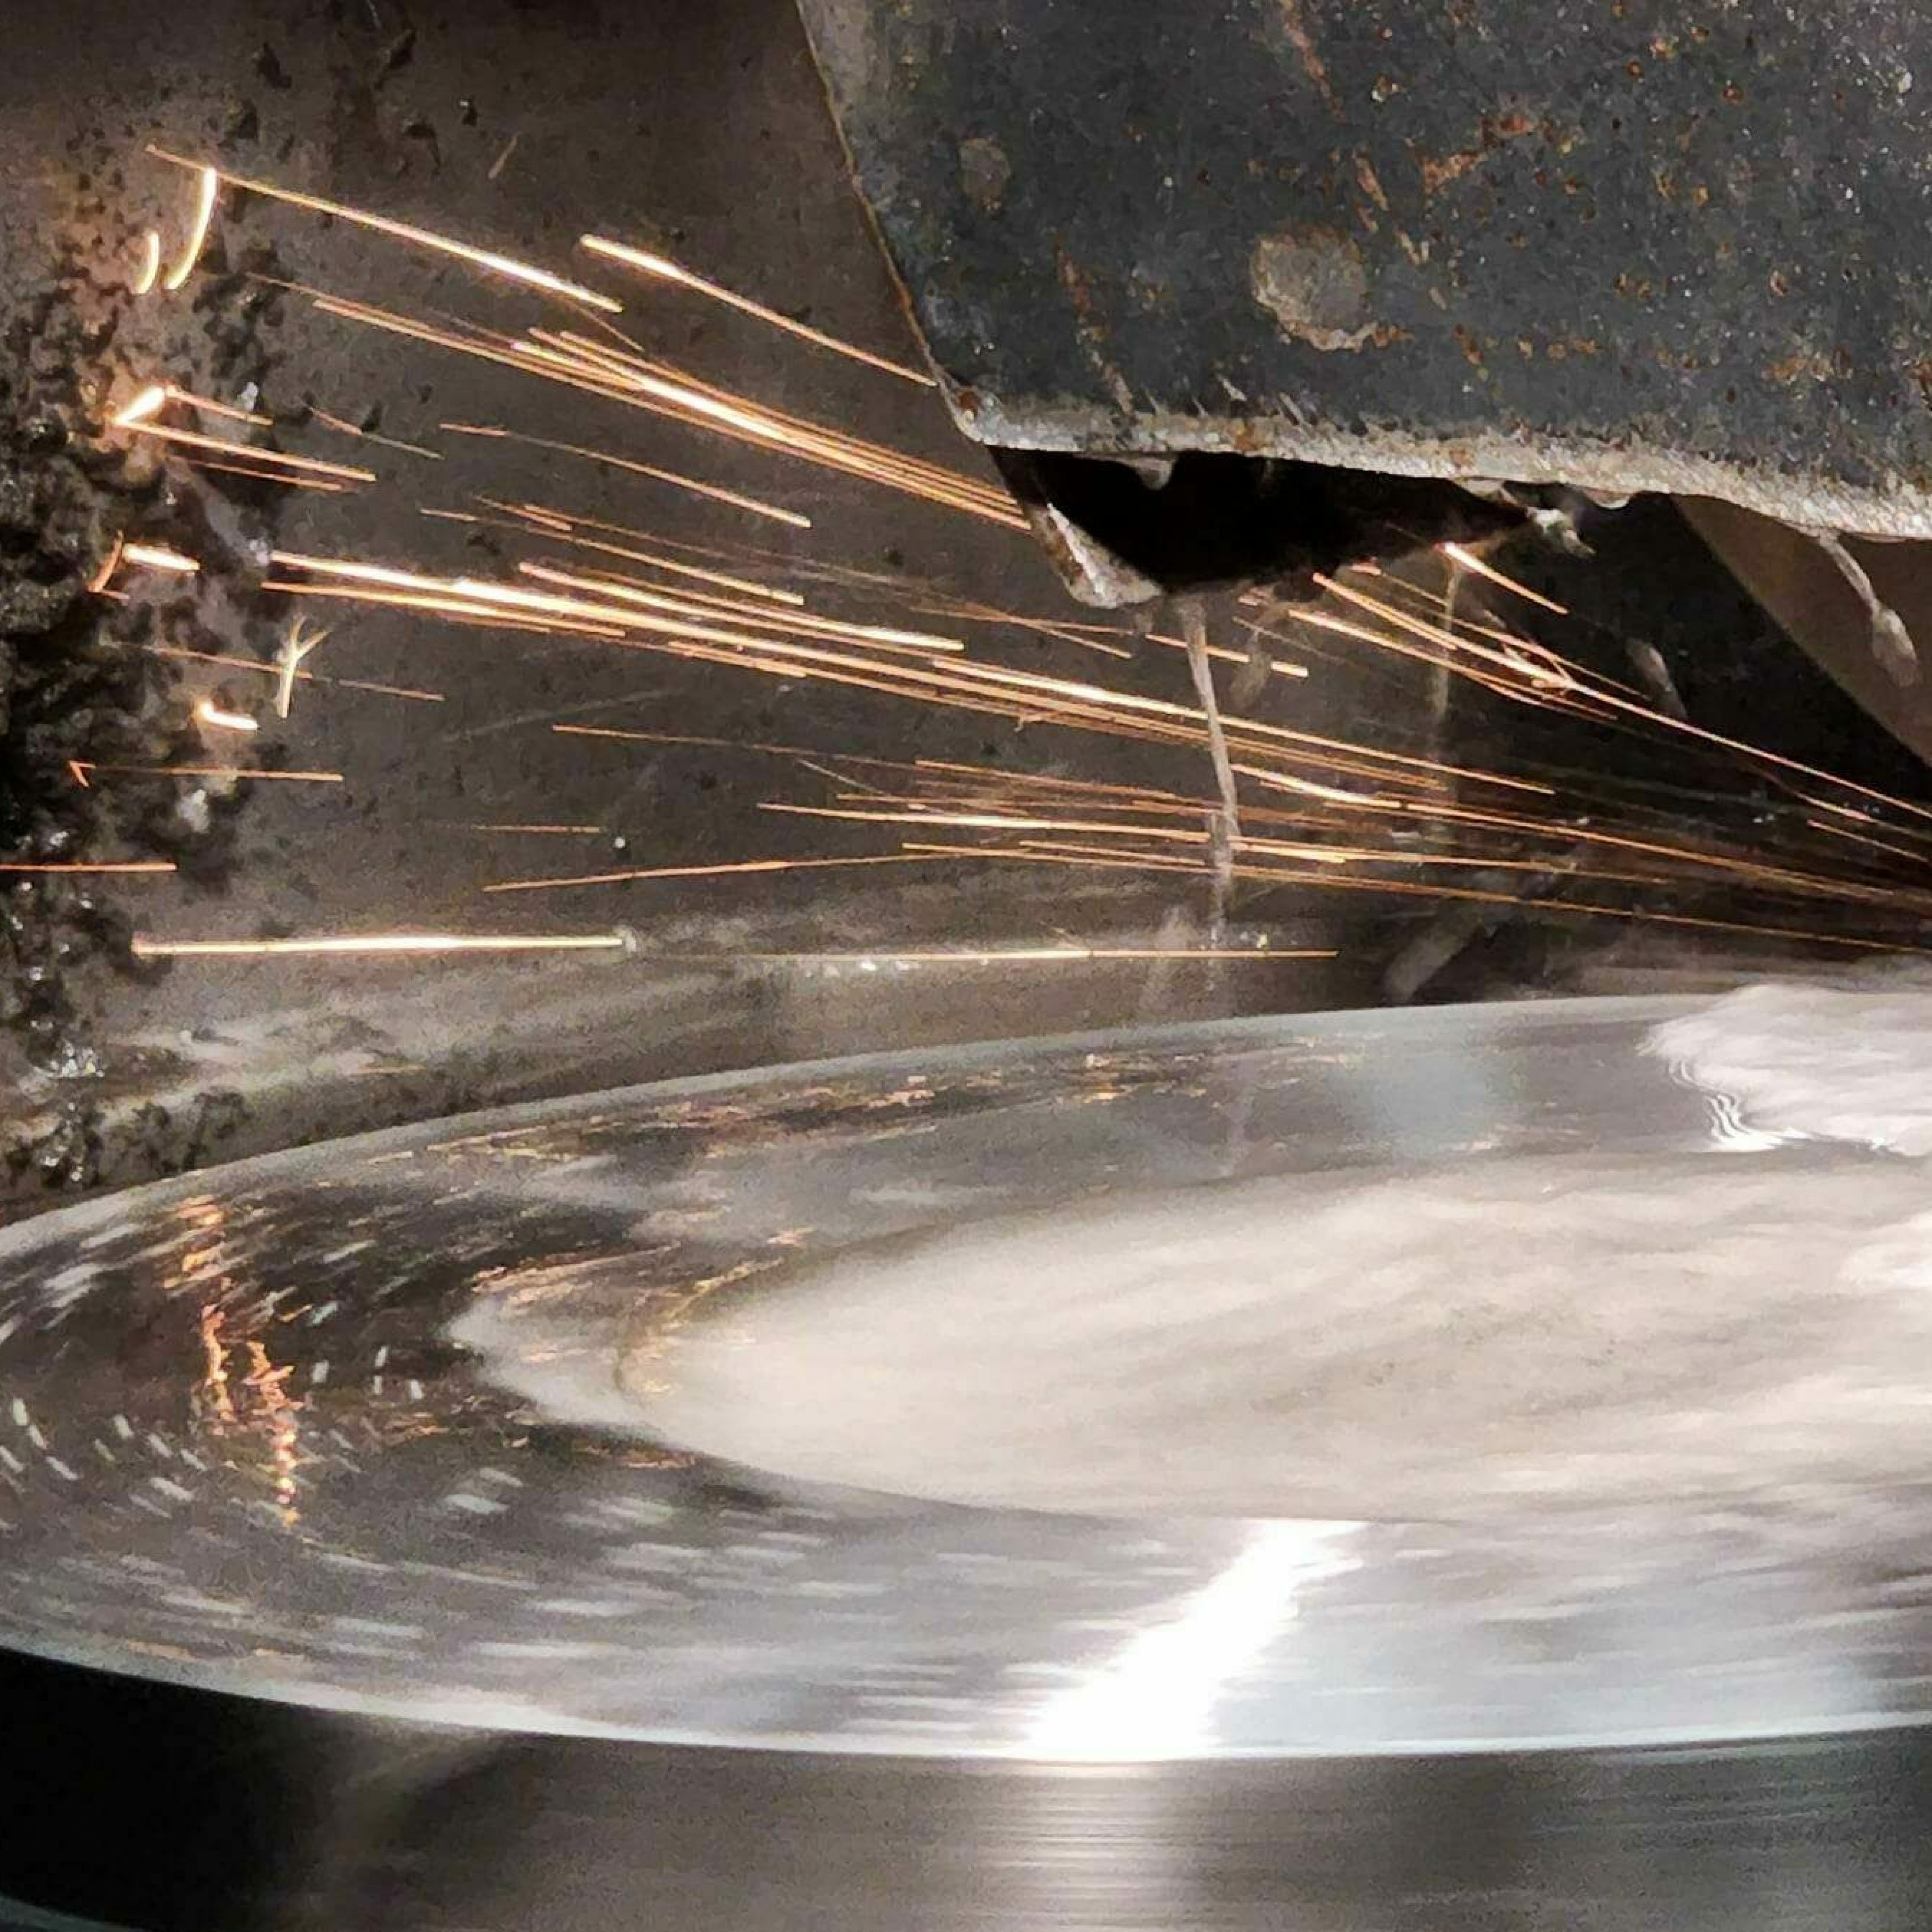 Sparks flying from steel tooling on Blanchard grinder